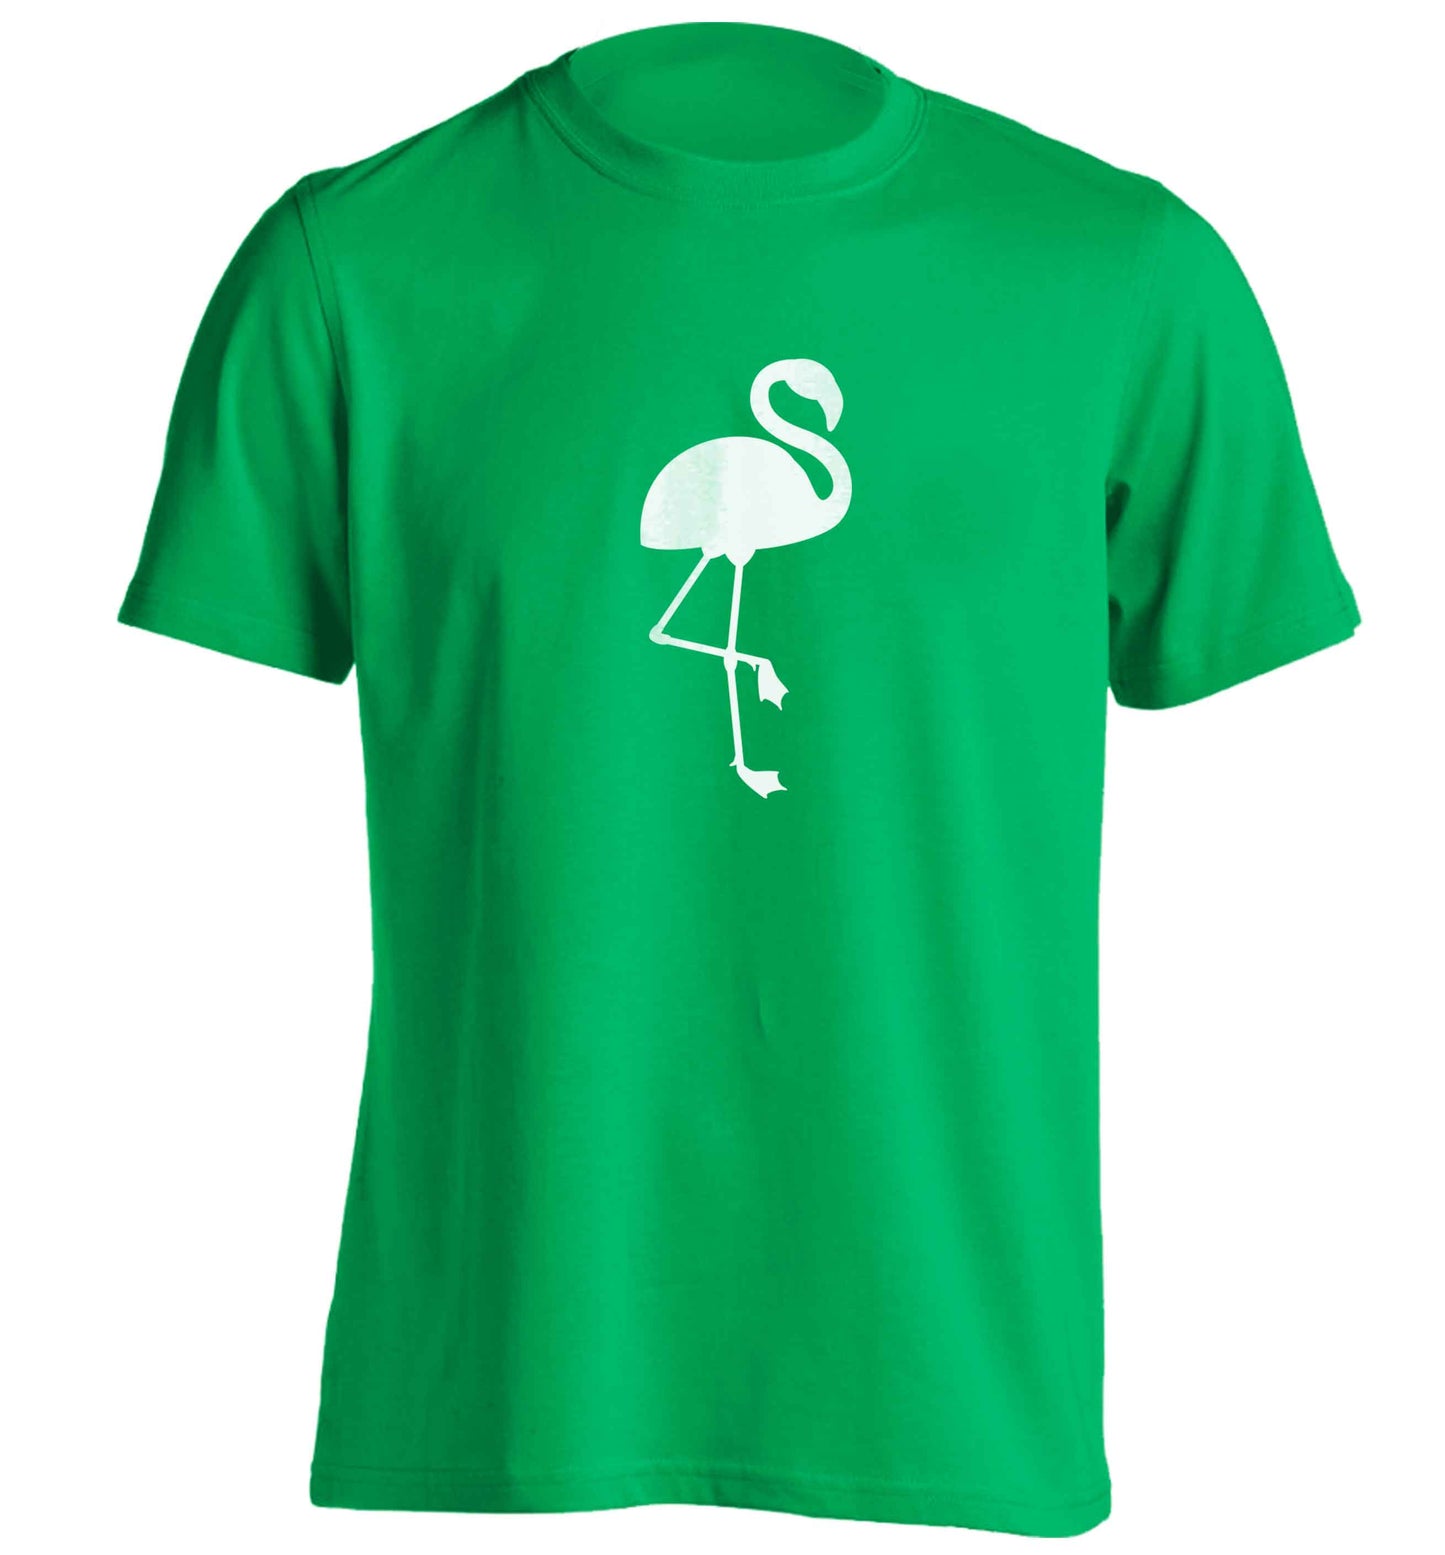 Pink flamingo adults unisex green Tshirt 2XL